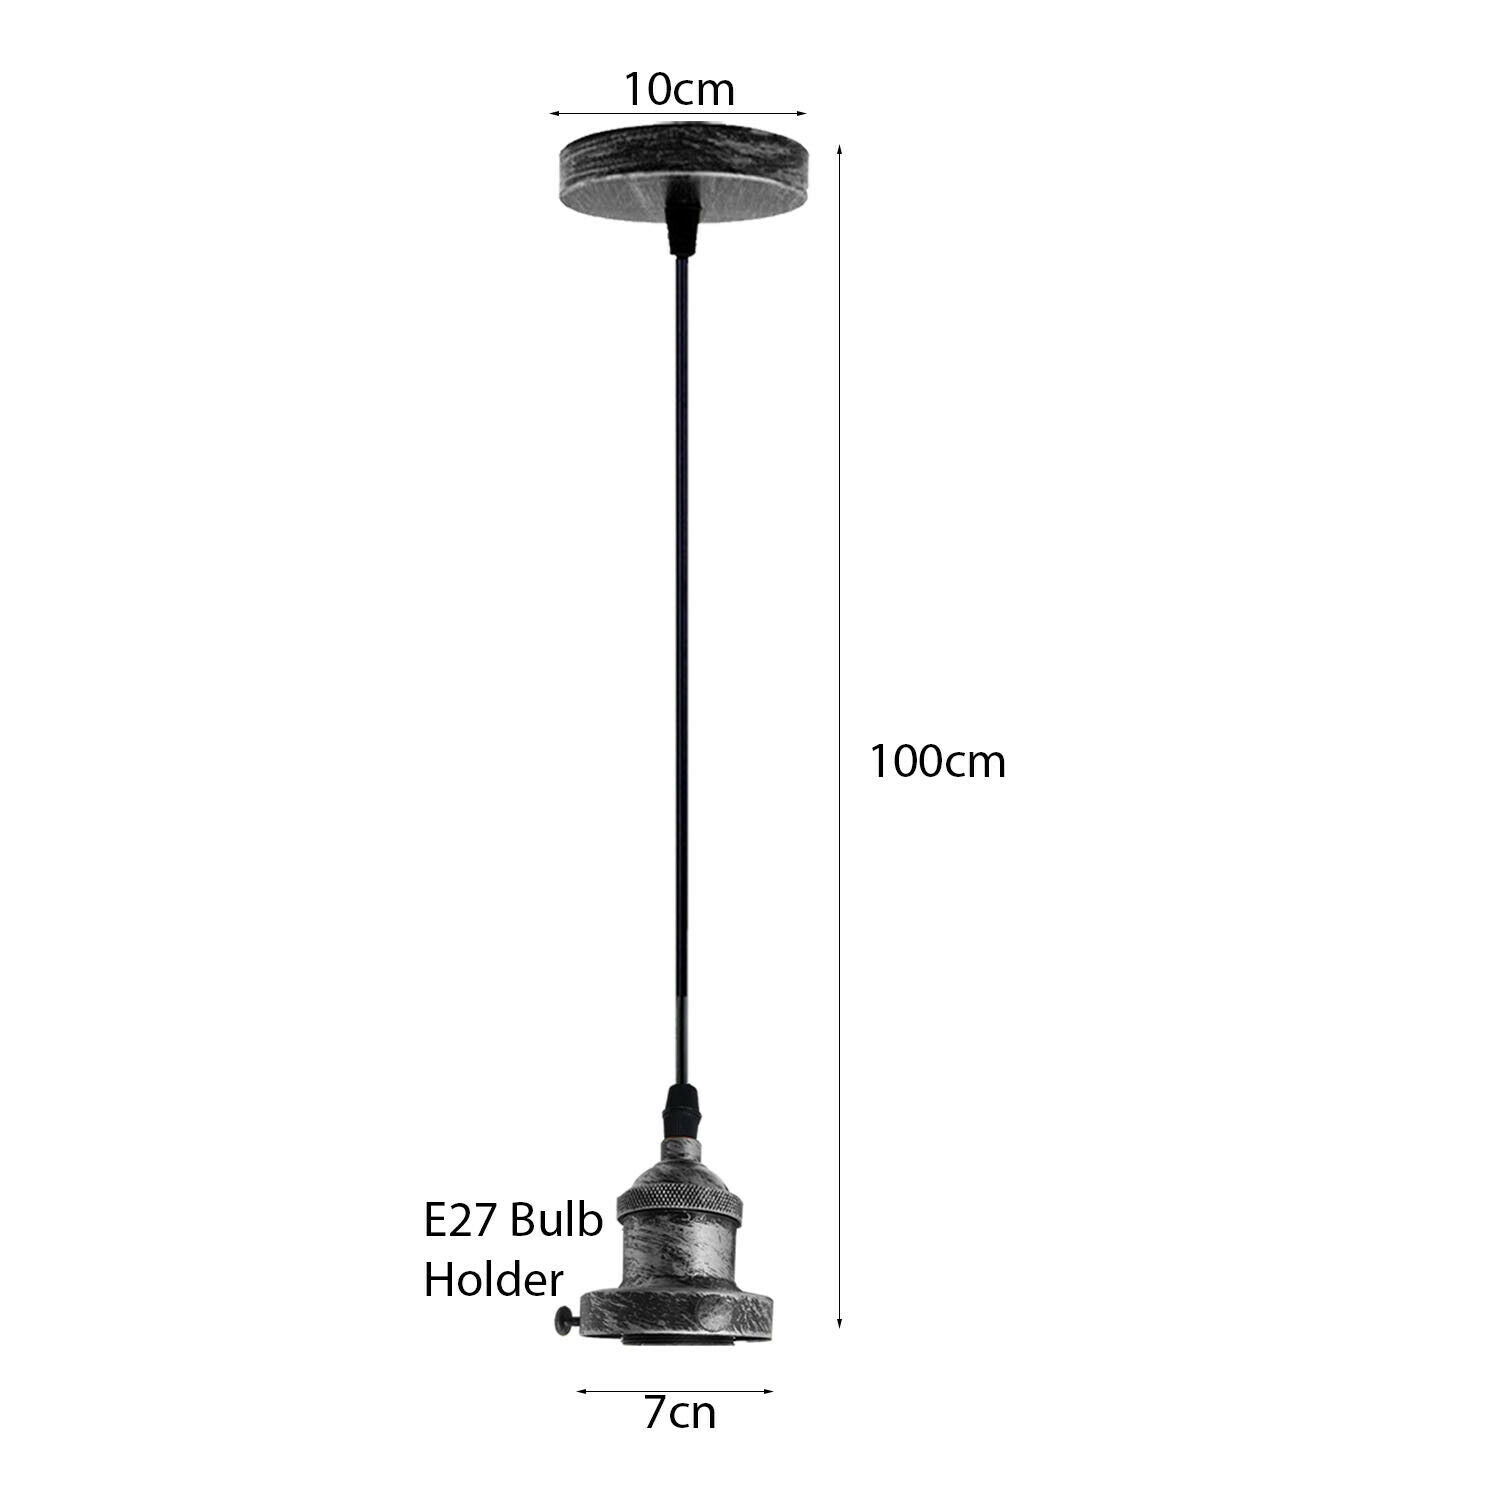 E27 Ceiling Rose Light Fitting Vintage Industrial Pendant Lamp Bulb Holder Light - Brushed Silver~2207 - electricalsone UK Ltd